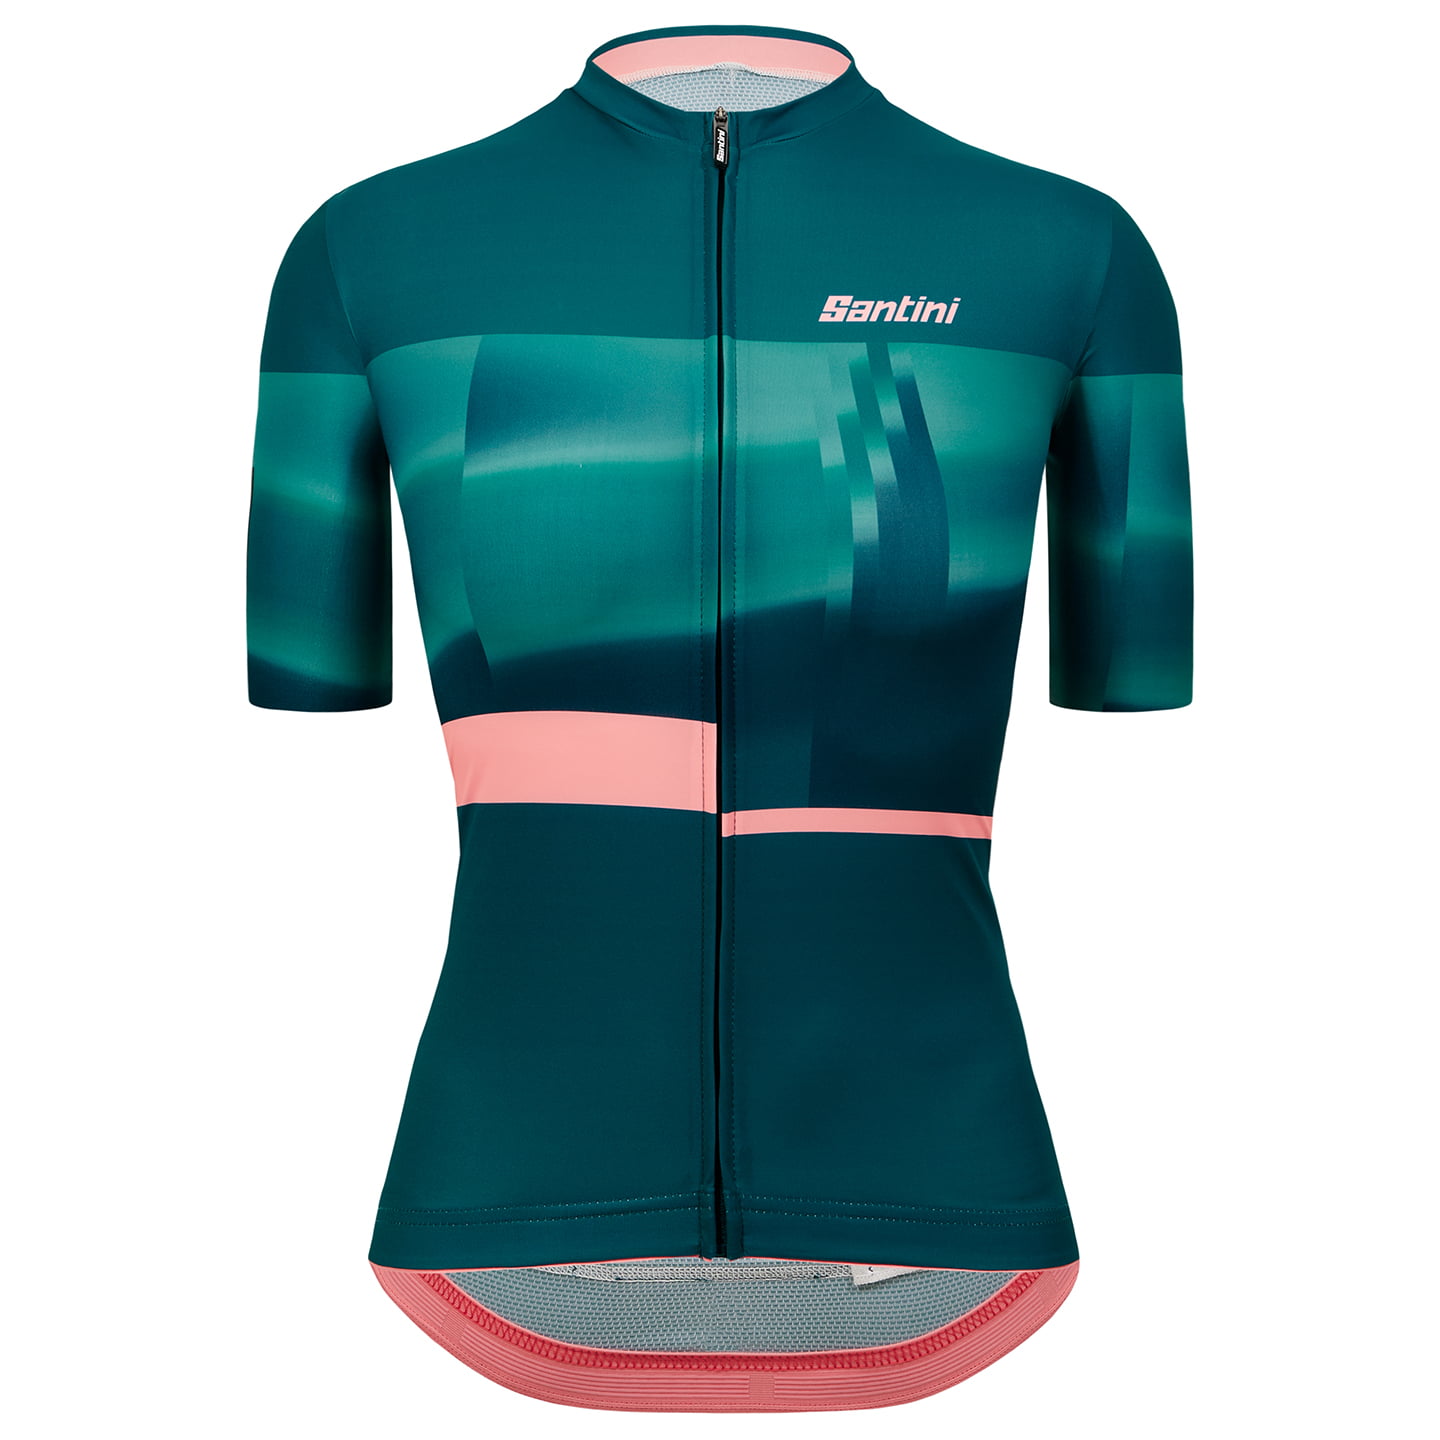 SANTINI Mirage Women’s Jersey Women’s Short Sleeve Jersey, size M, Cycling jersey, Cycle clothing